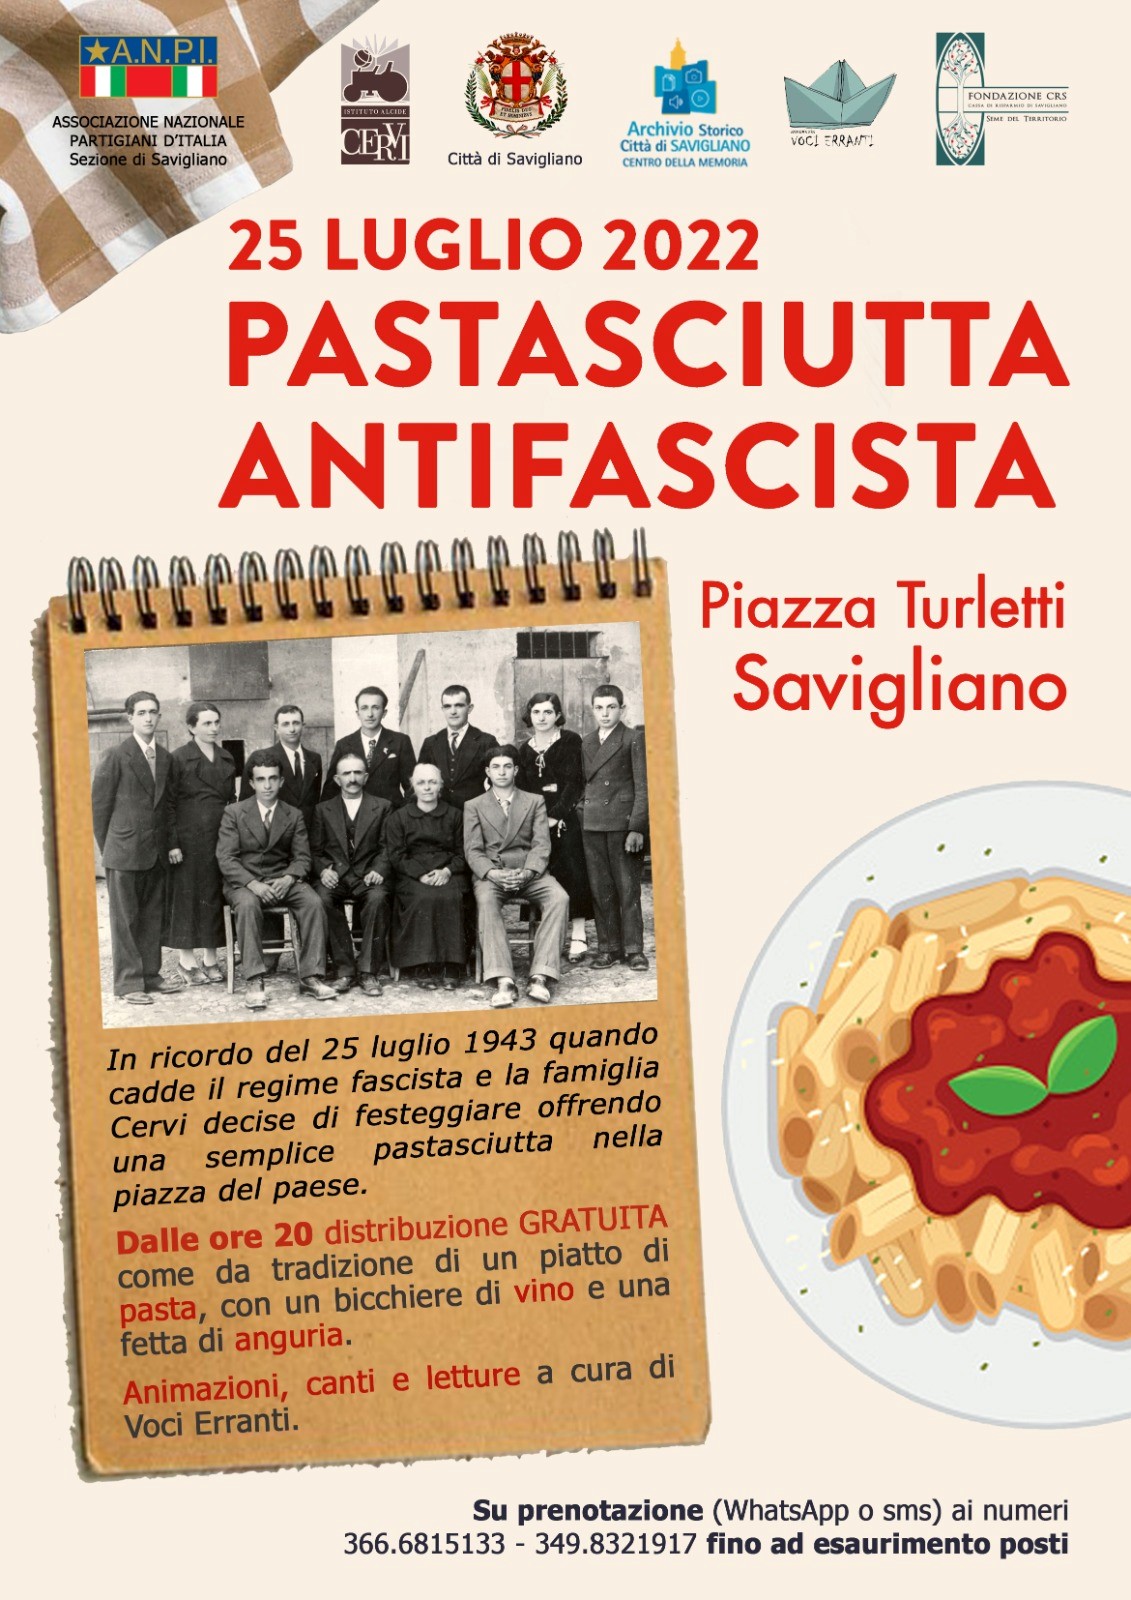 Savigliano, Pastasciutta antifascista 25 luglio 2022